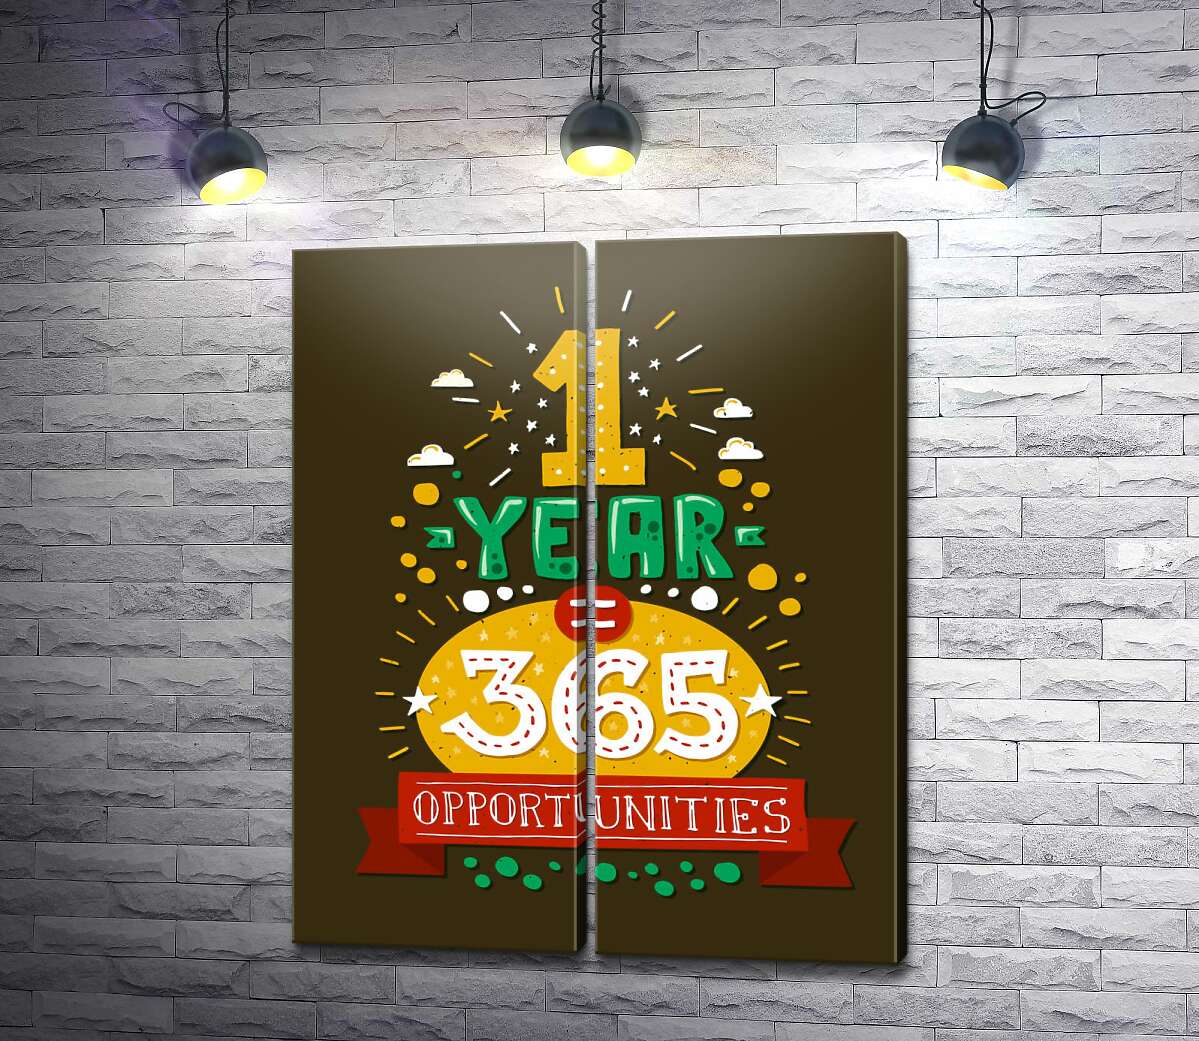 модульная картина Мотивационная надпись: "1 year = 365 opportunities"